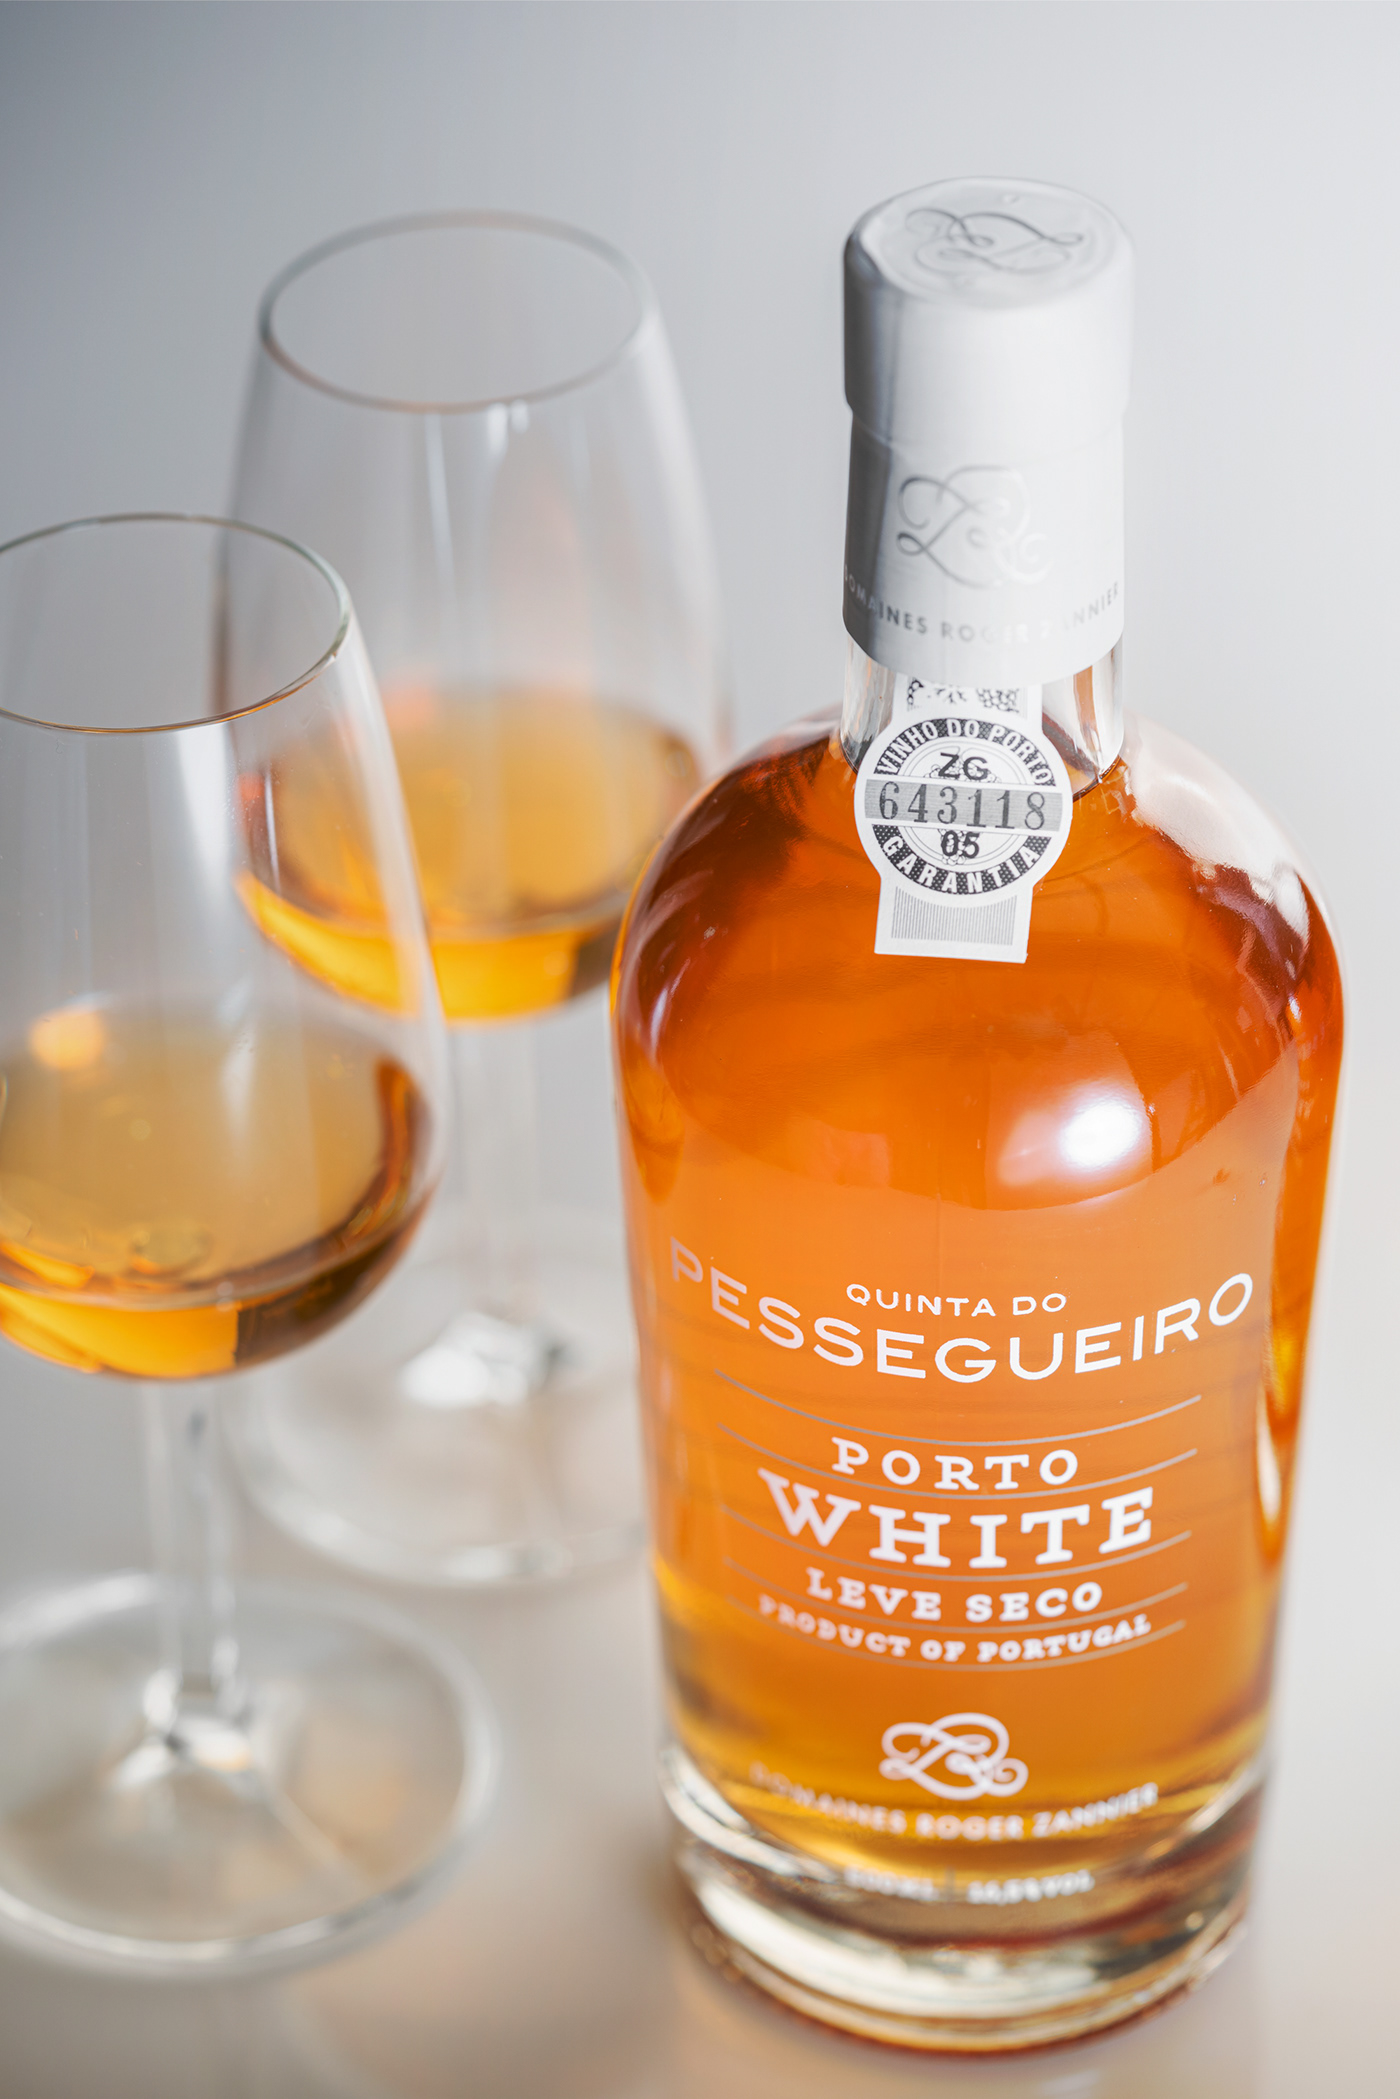 bottle label design wine Douro Label product silkscreen